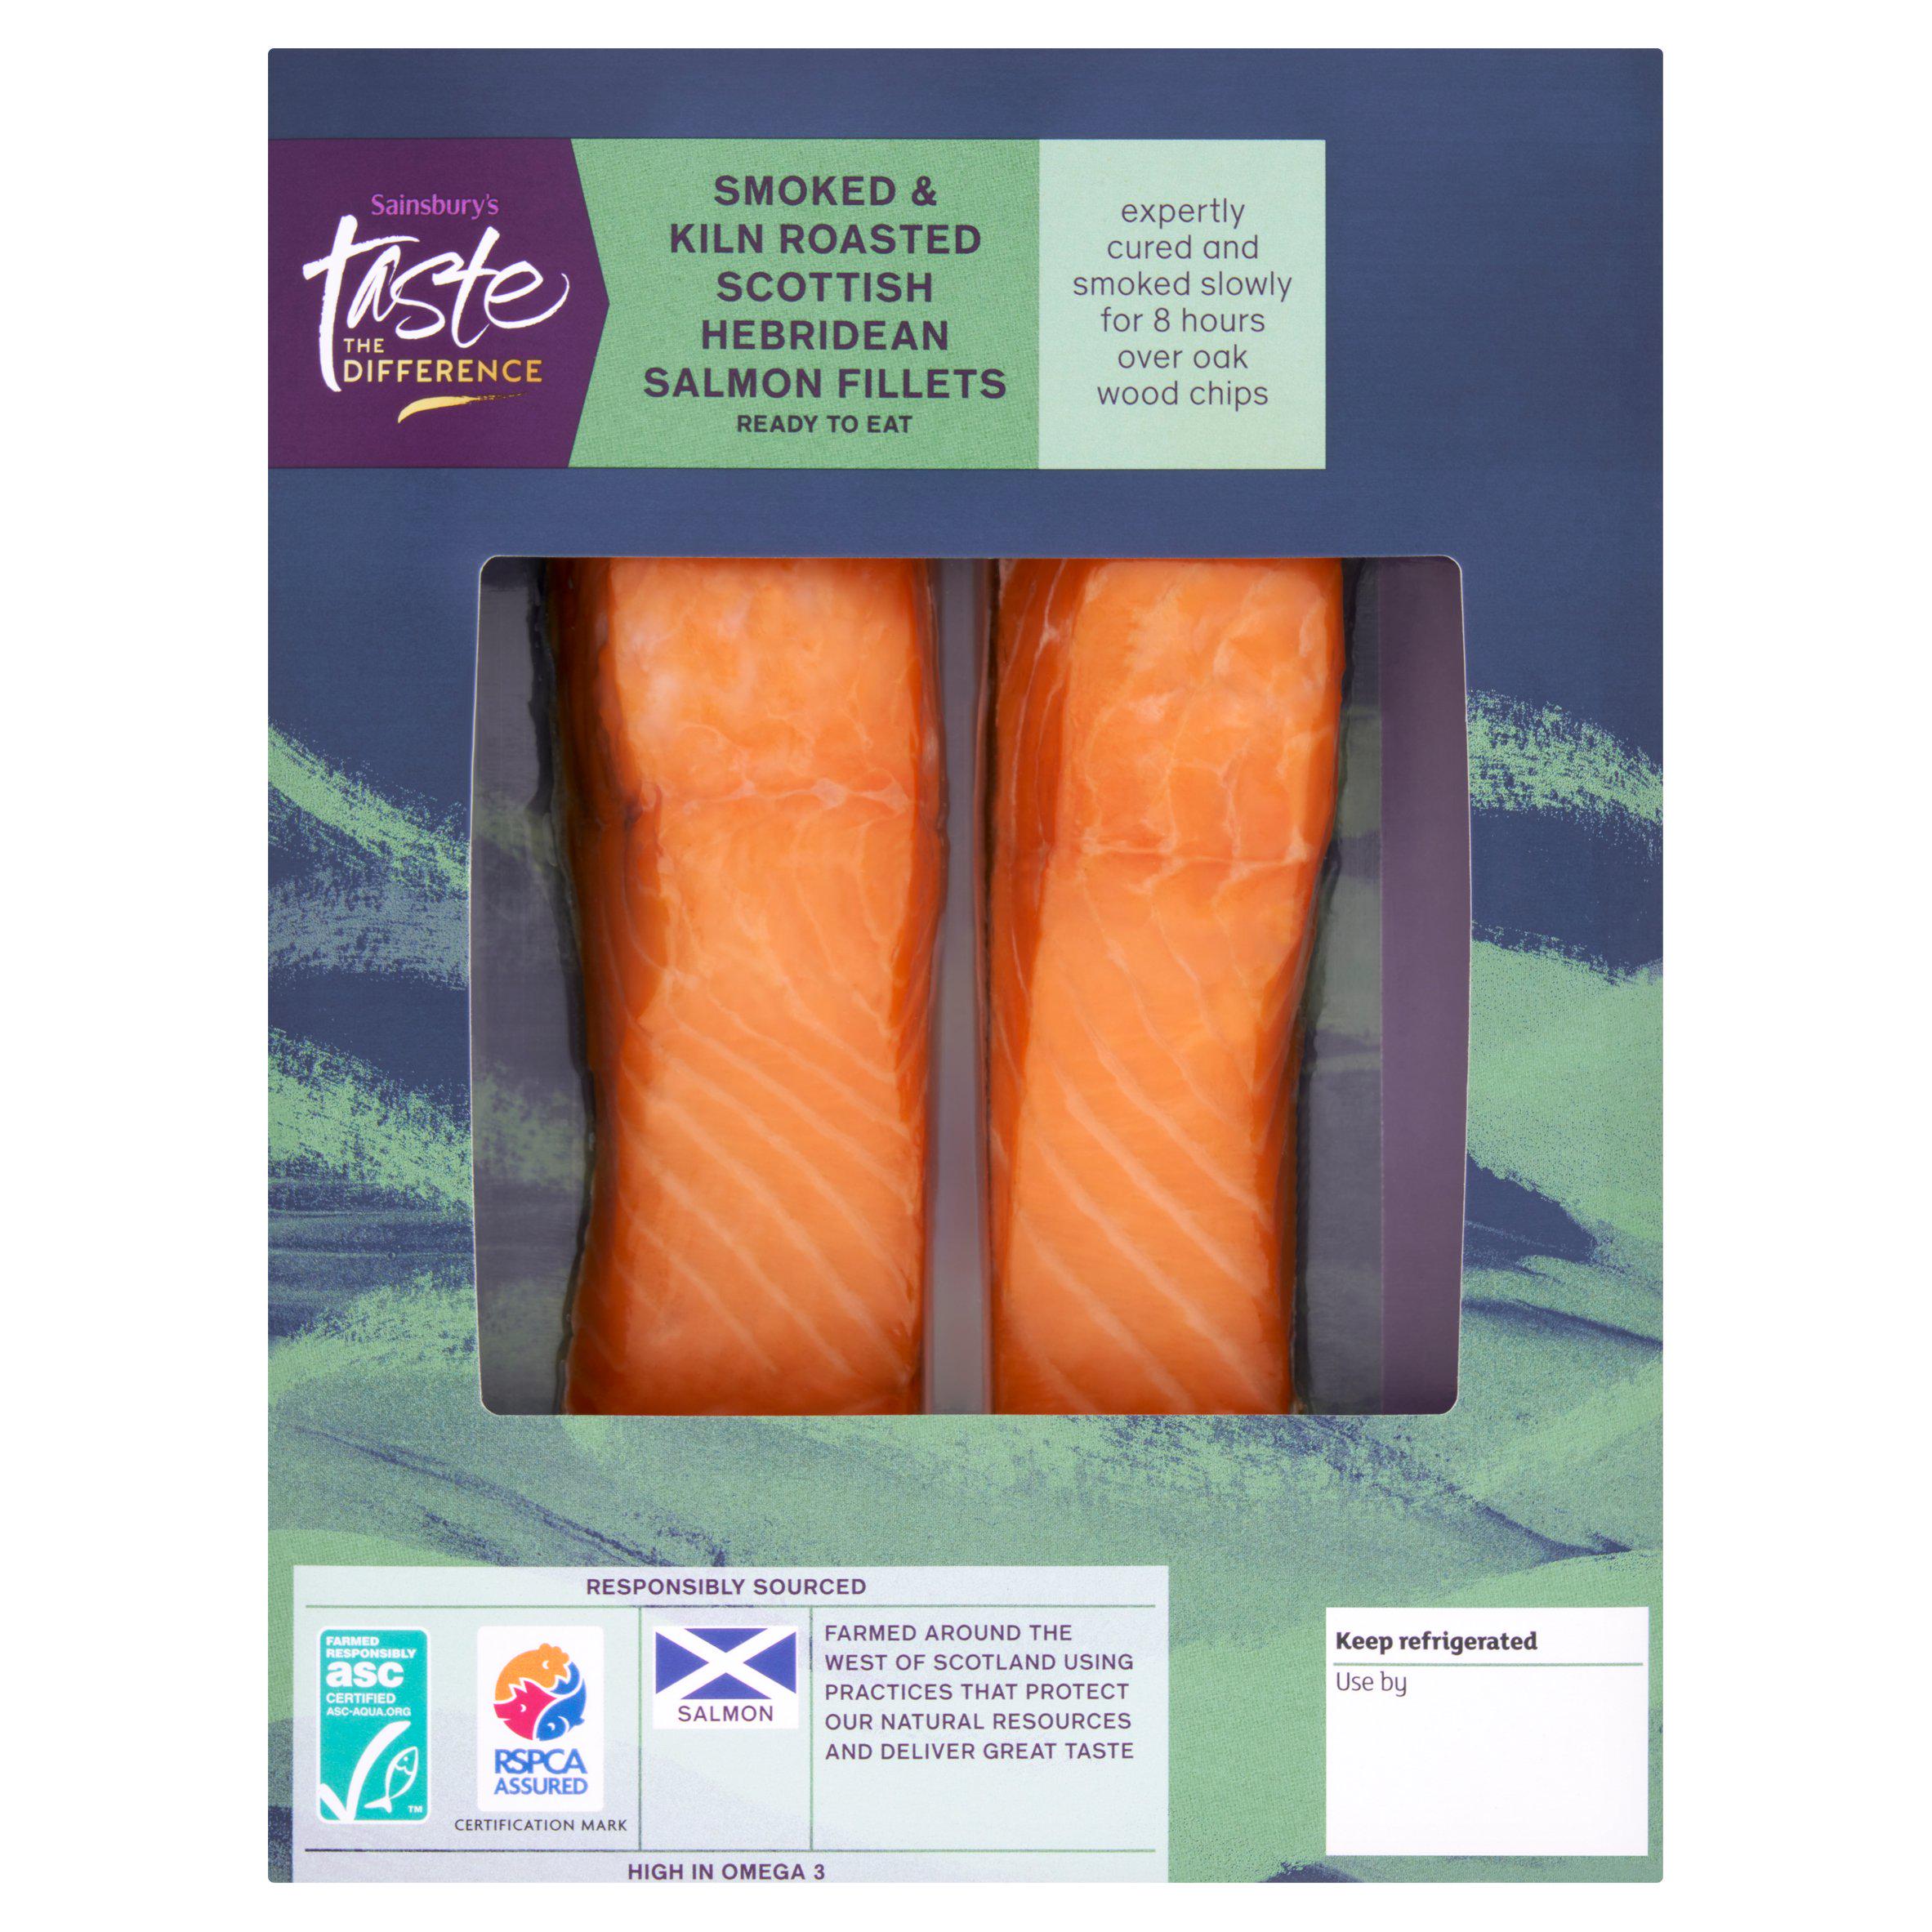 Sainsbury’s Hebridean Roast Scottish ASC Salmon Fillet, Taste the Difference